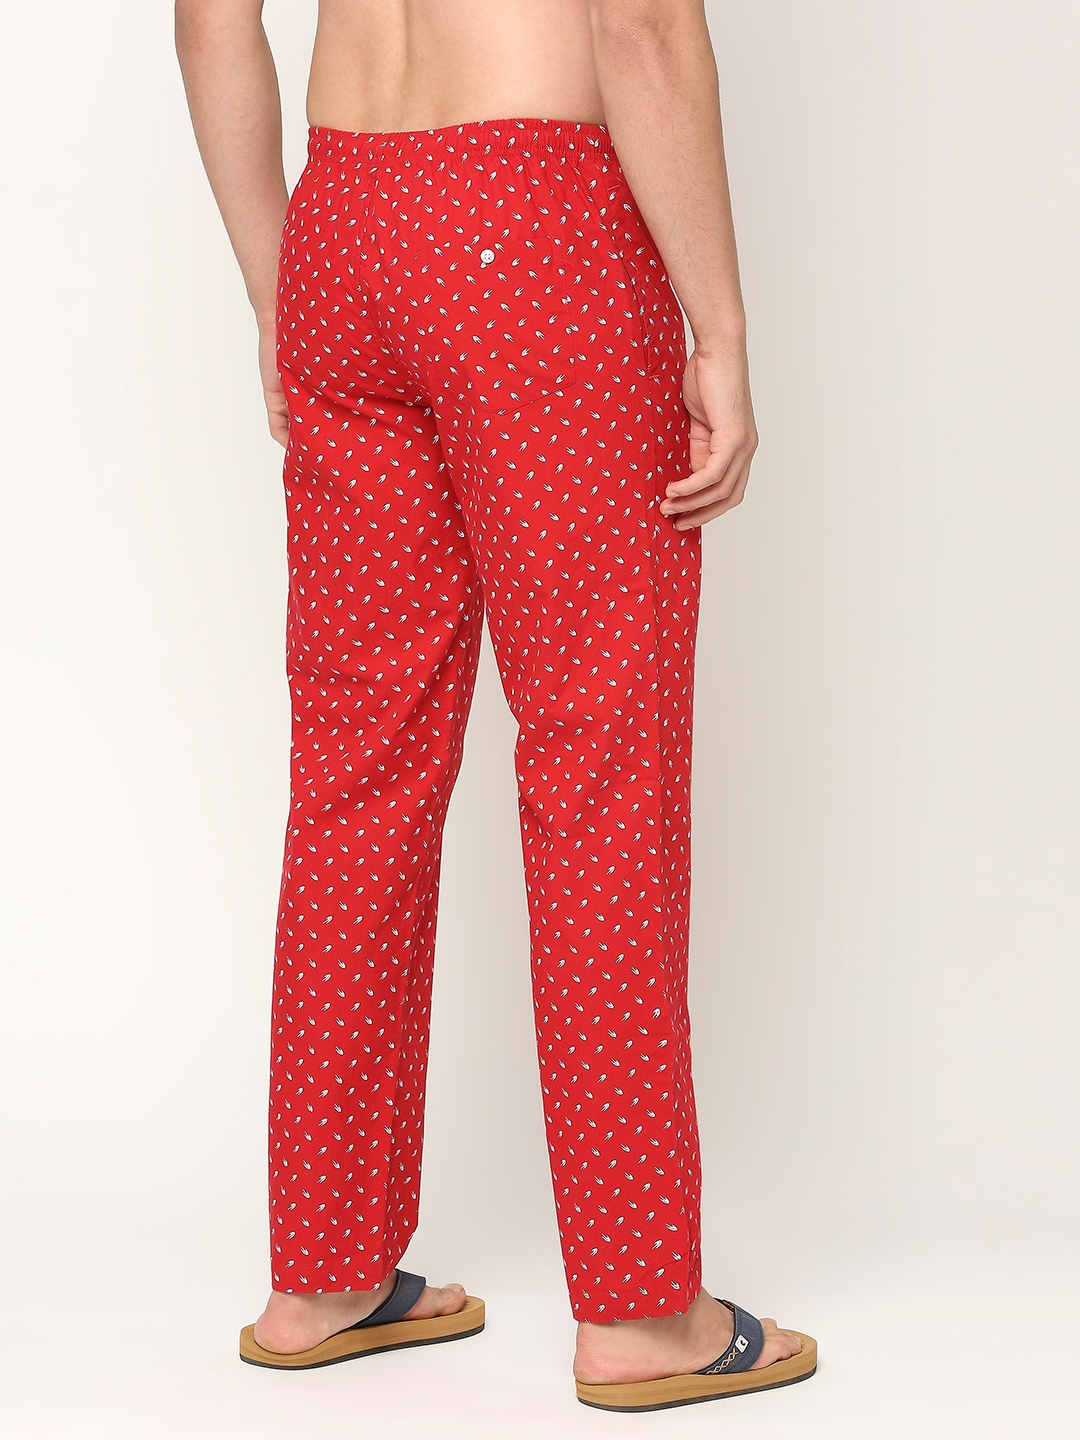 spykar | Underjeans by Spykar Premium Cotton Printed Men Red Pyjama 2